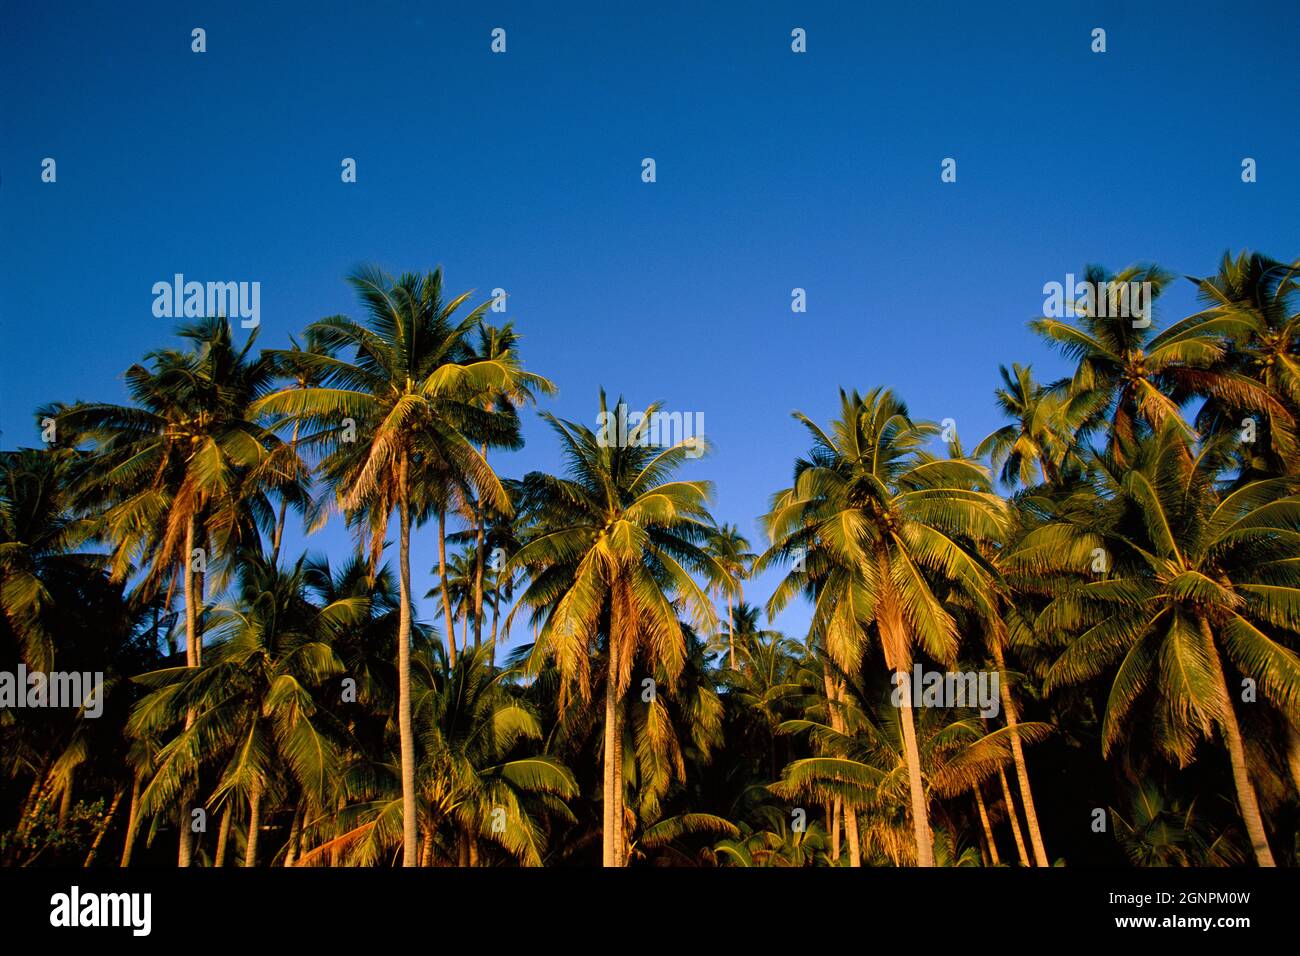 Philippines. Coconut palm trees. Stock Photo